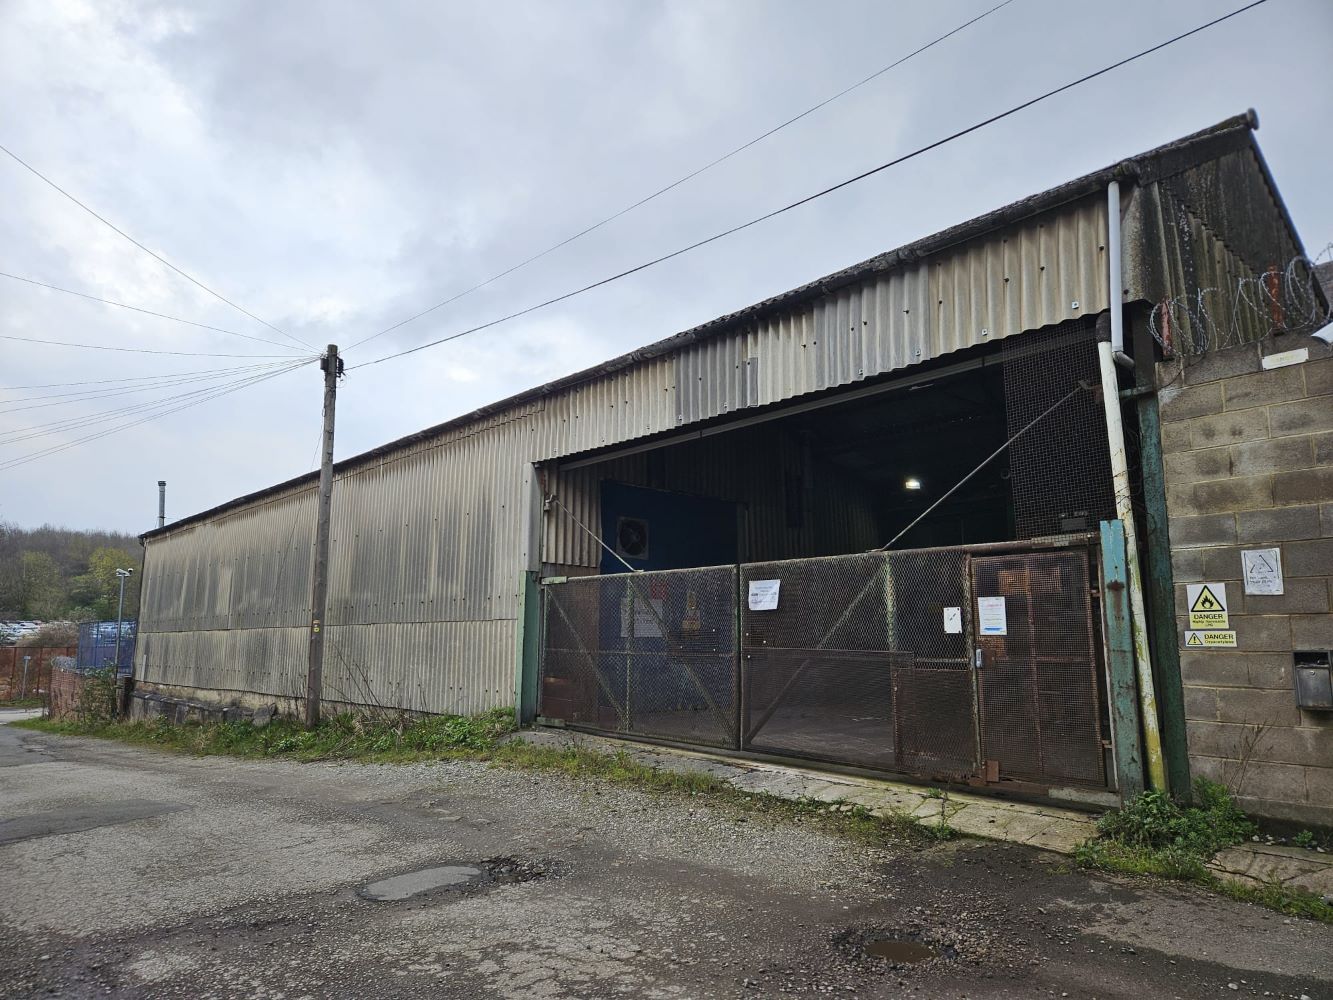 Main Works Area, Troy Works, Leeds, West Yorkshire, LS28 6QA